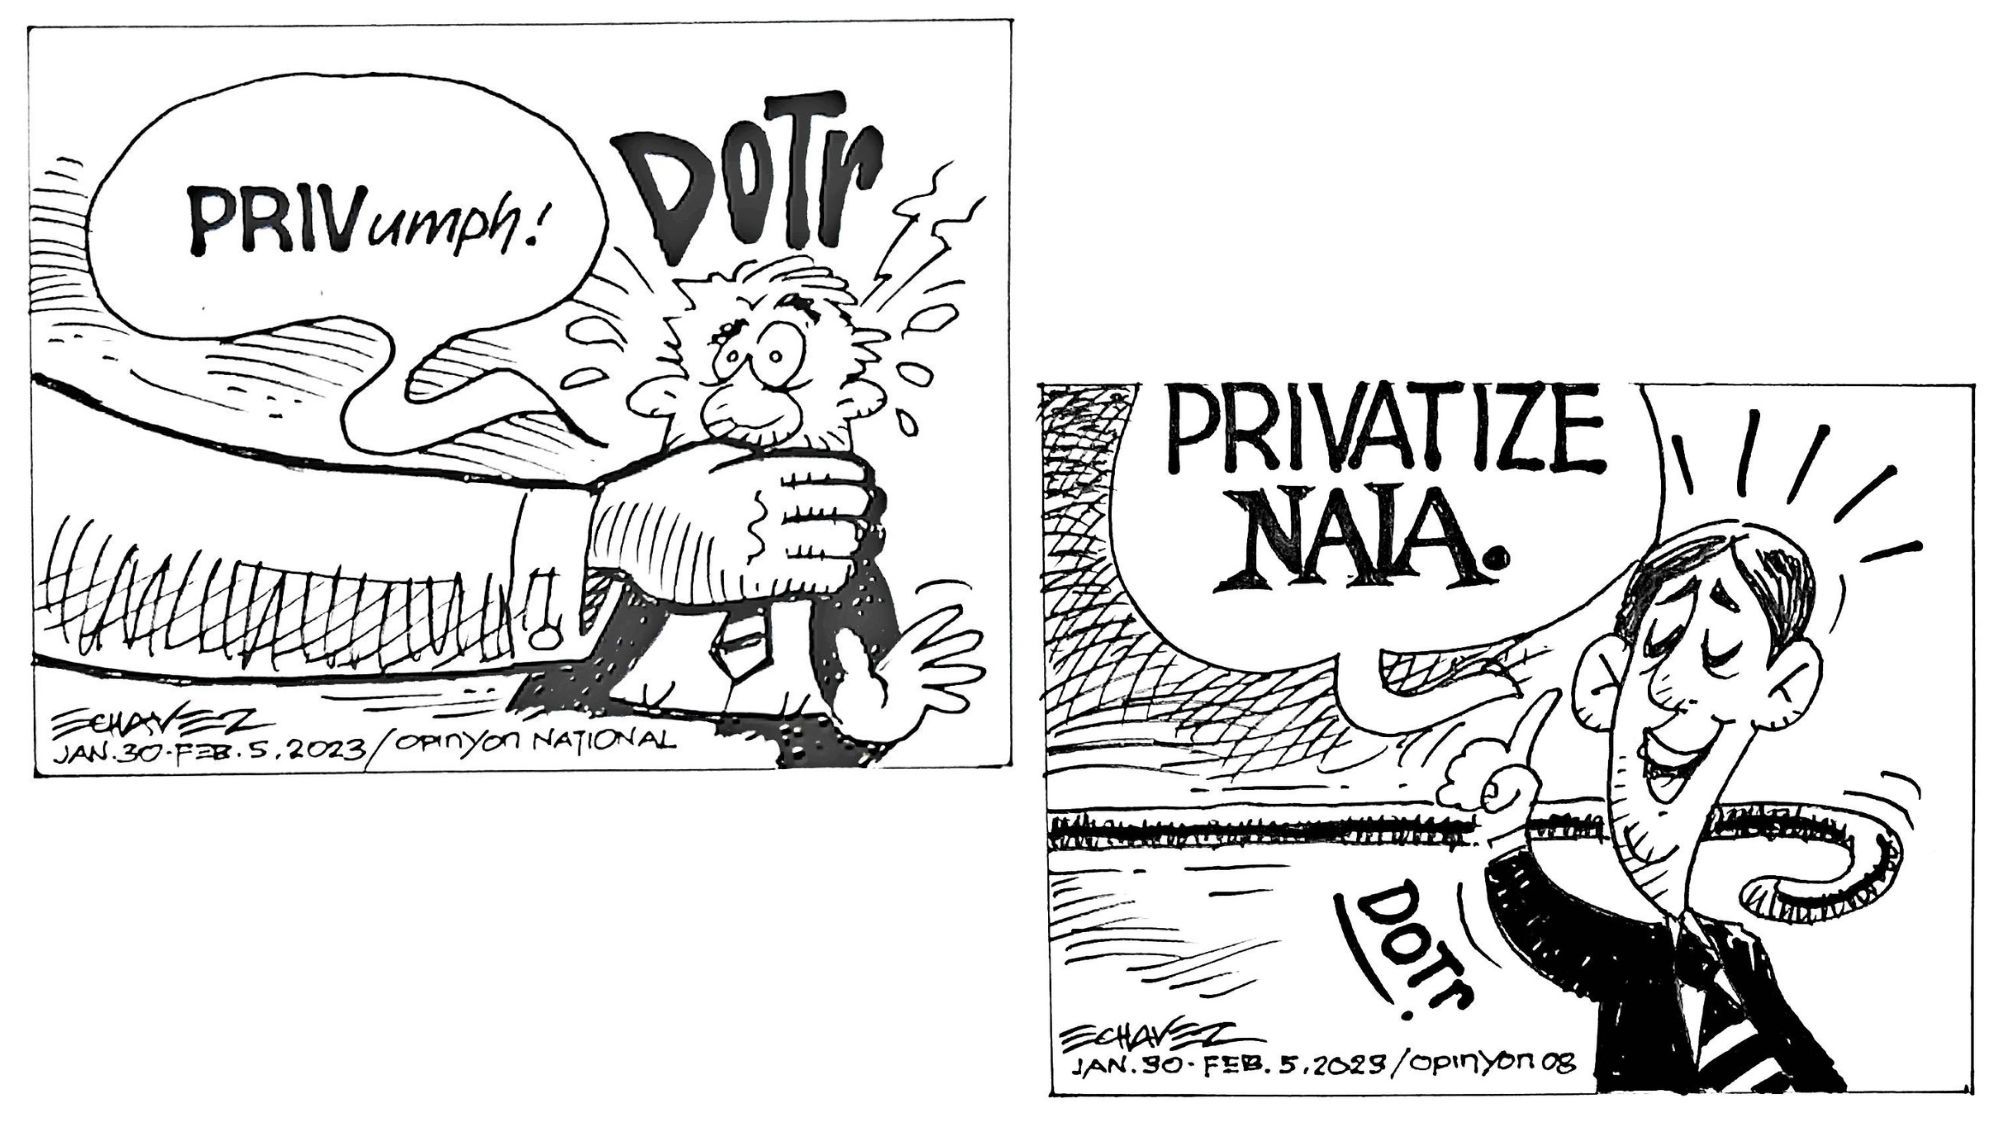 DoTr should stop talking about privatizing NAIA